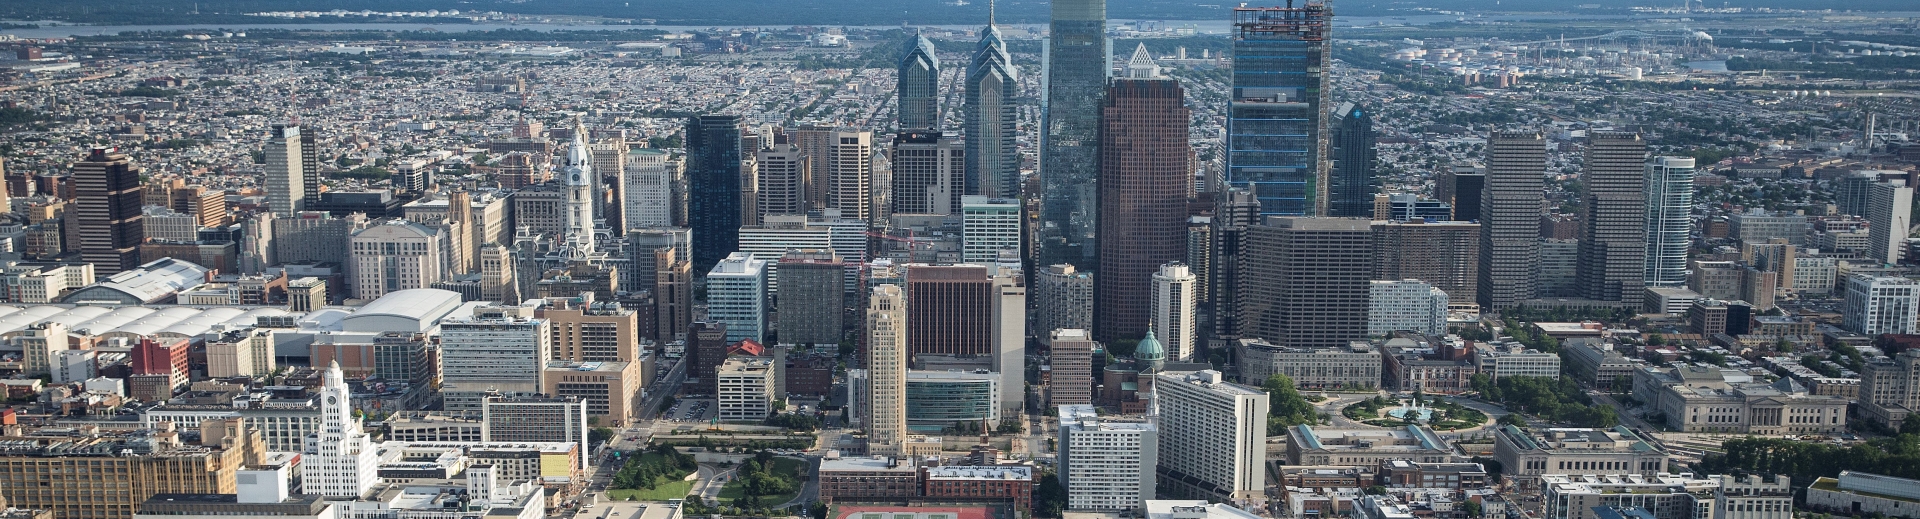 Philadelphia center city skyline aerial view.